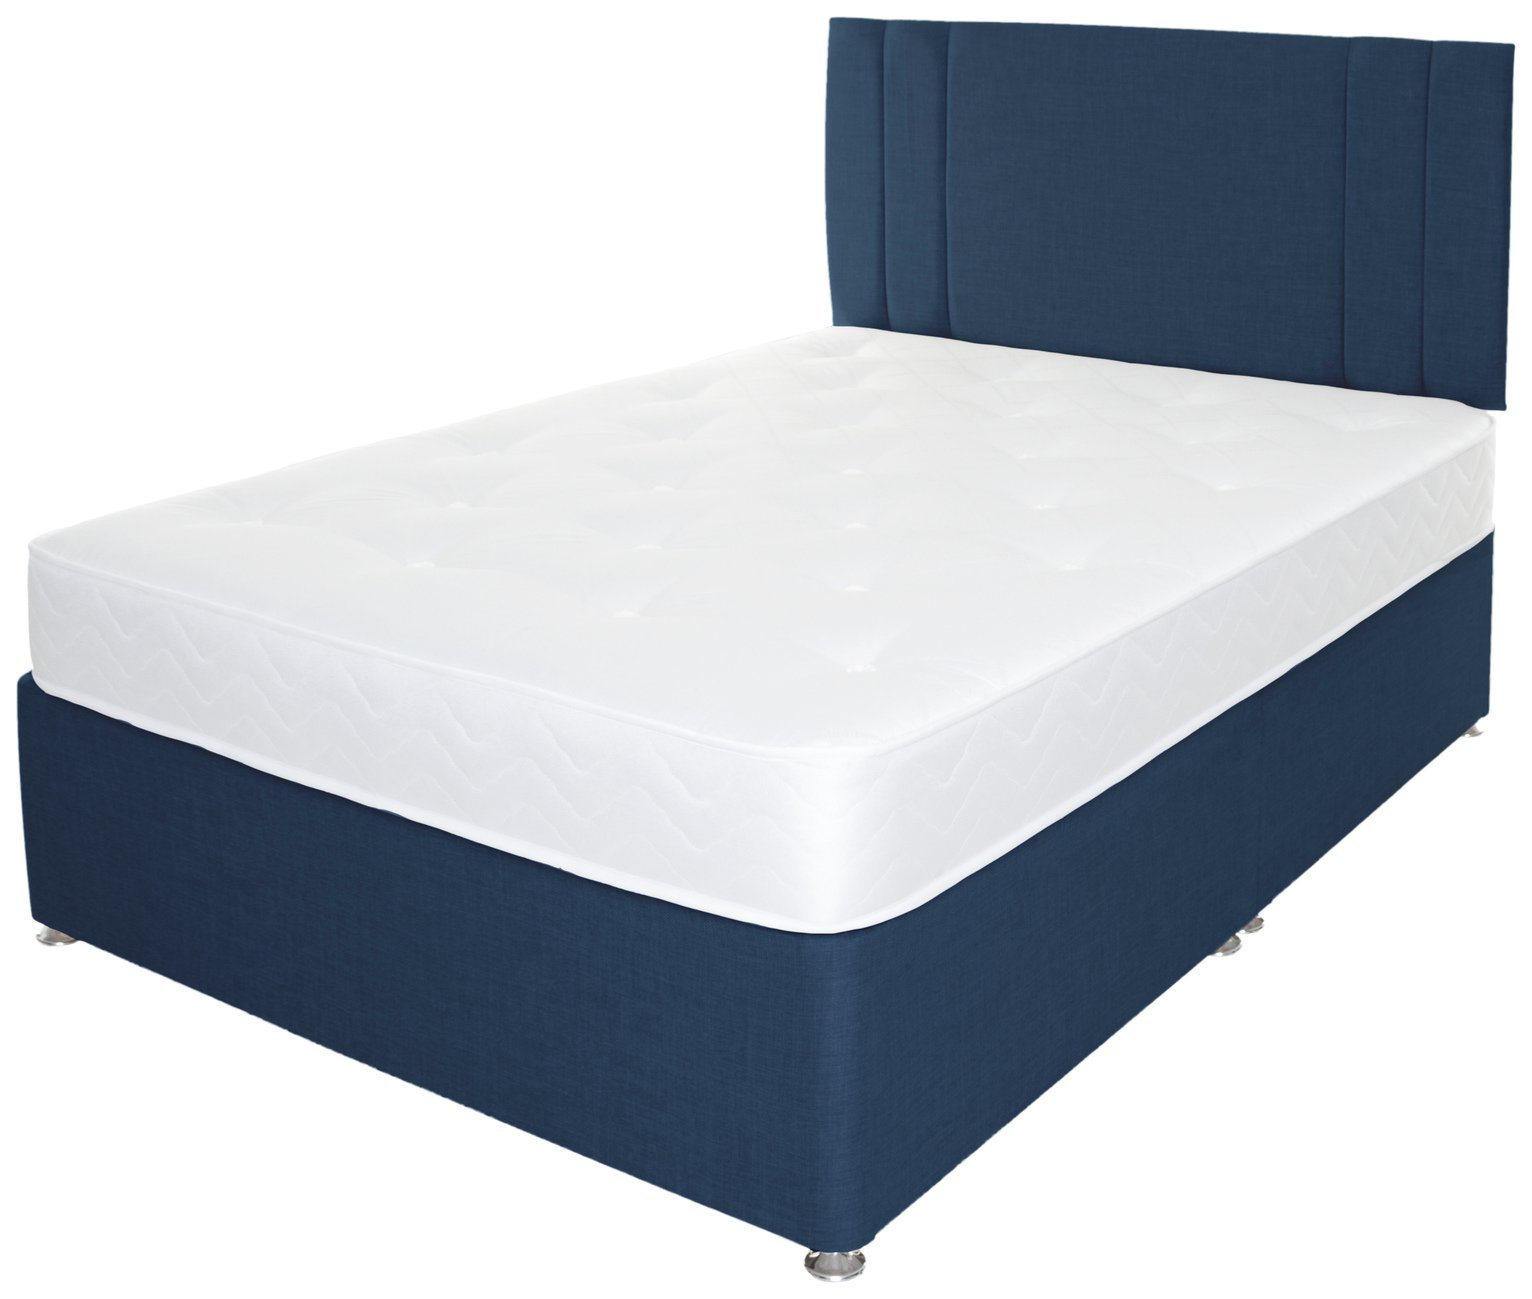 Airpsrung Henlow 1200 Pocket Divan Bed & Headboard - Blue at Argos